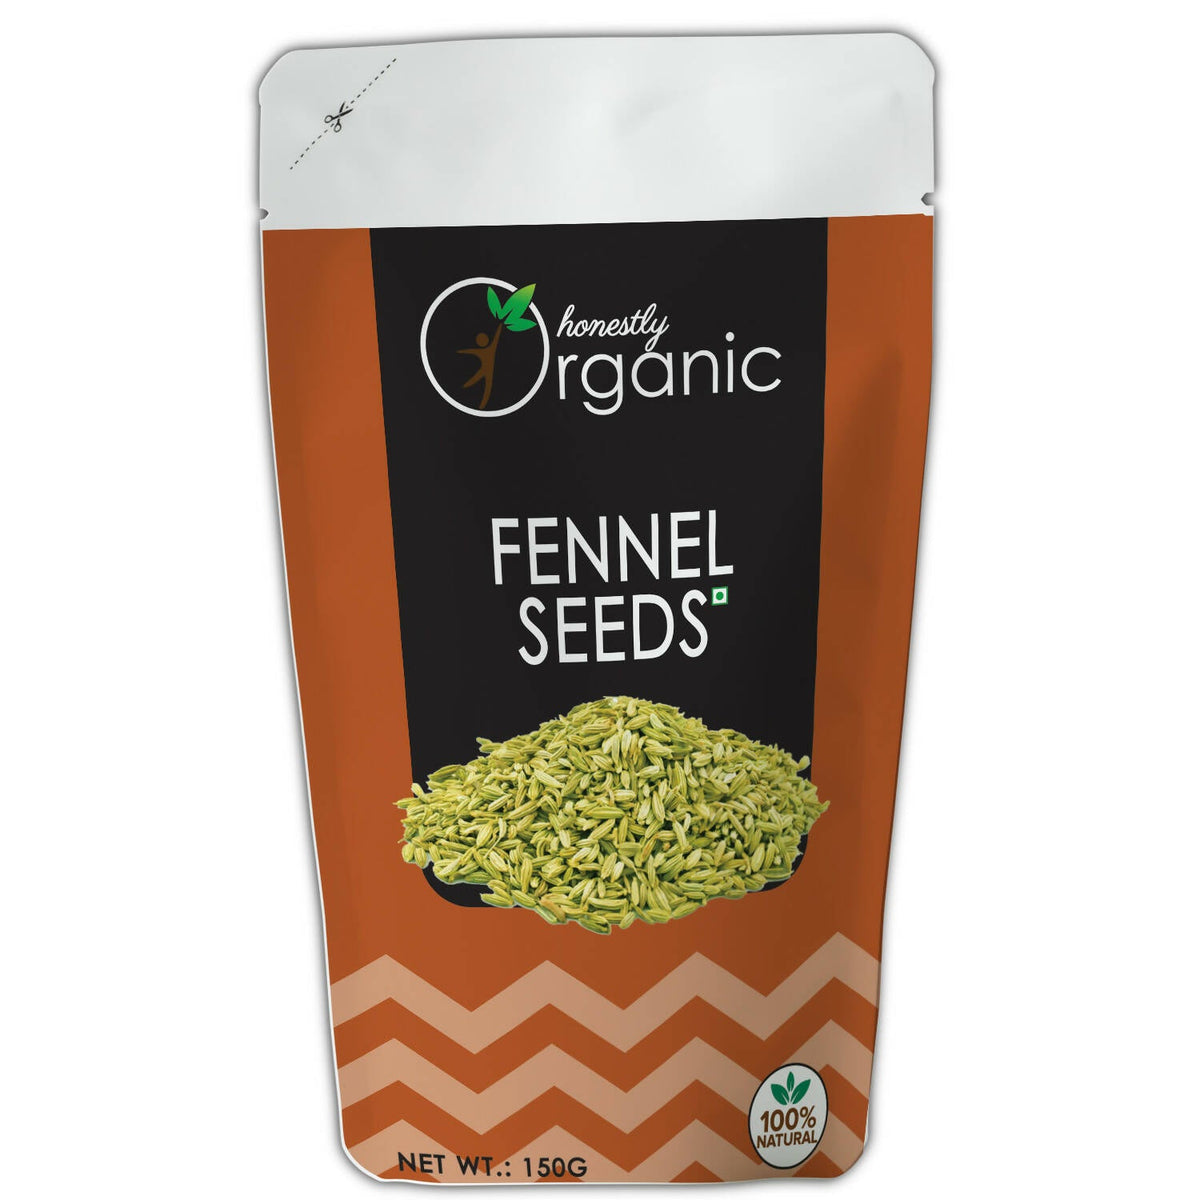 Honestly Organic Fennel Seeds - 150g Wemy Store